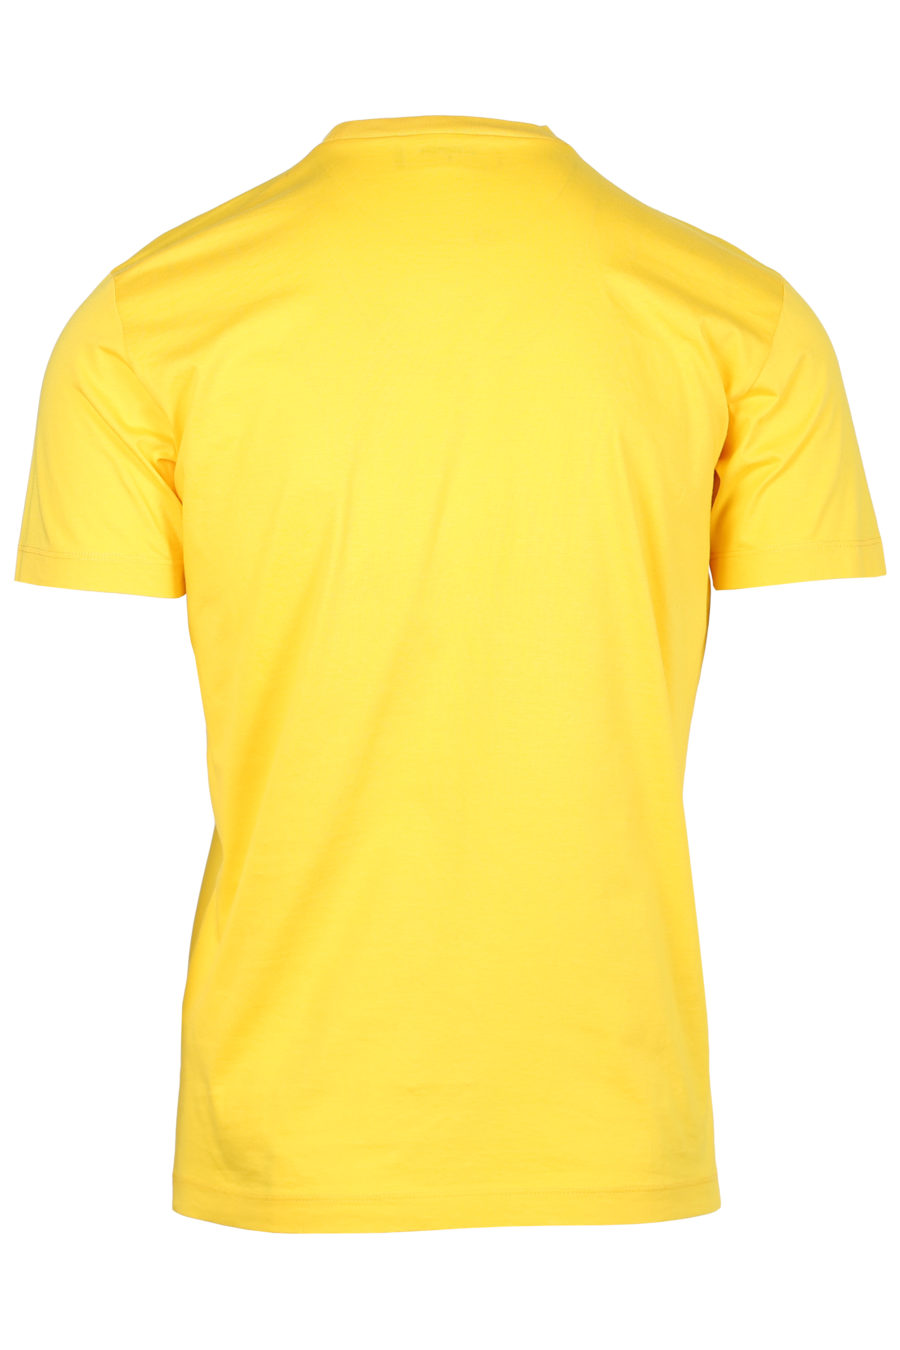 T-shirt amarela com o logótipo "Icon Spray" - IMG 2330